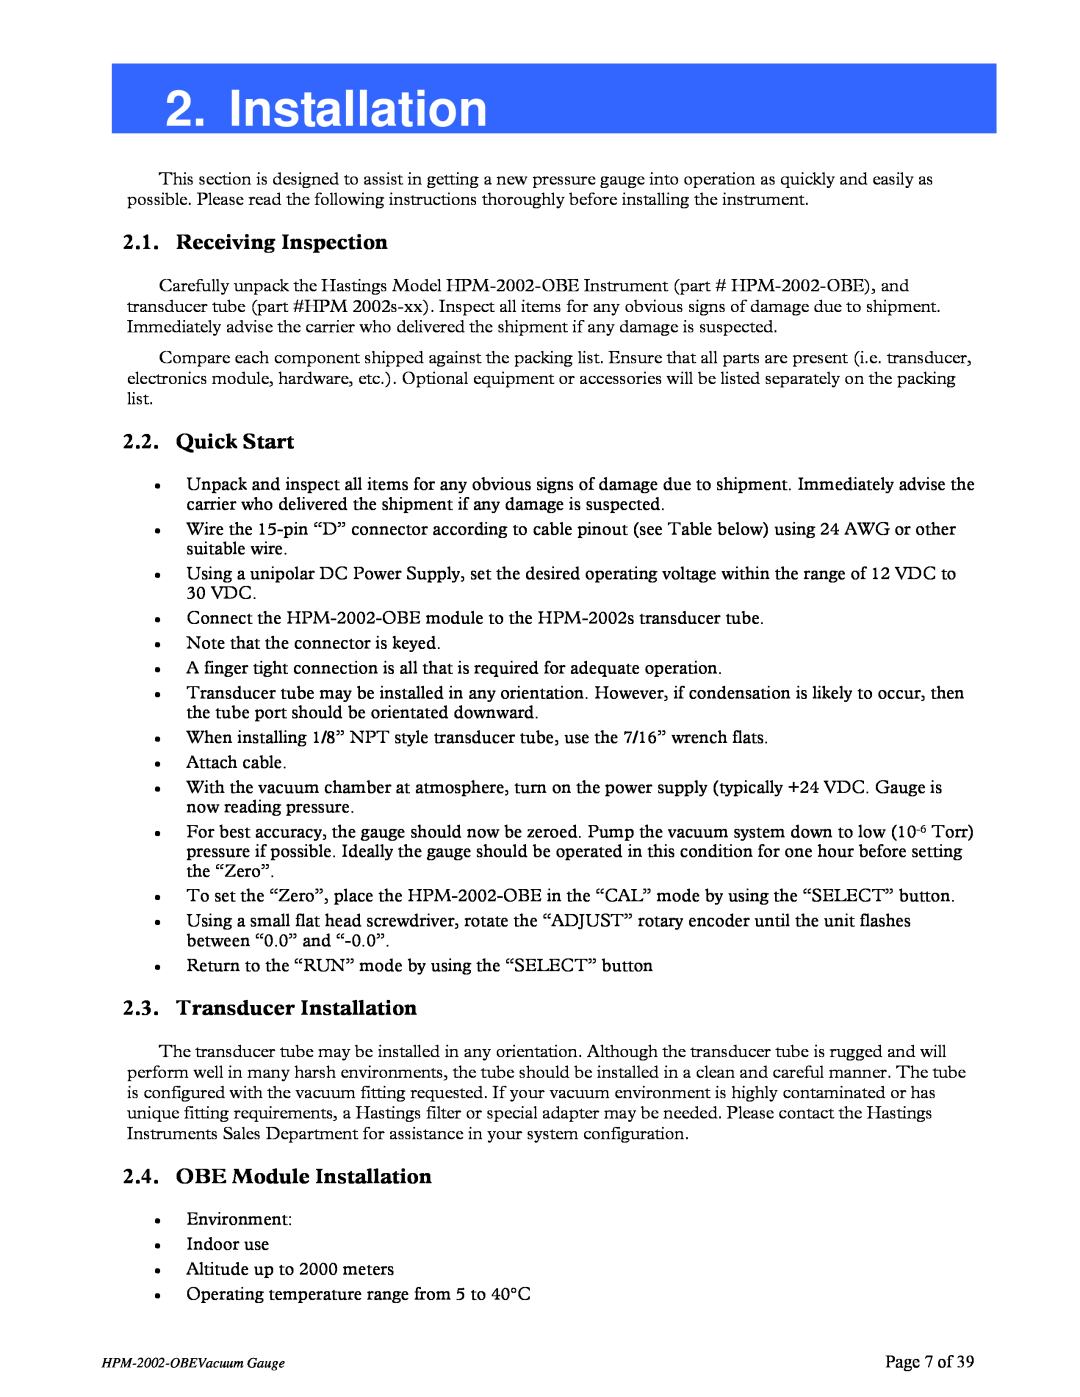 Teledyne HPM-2002-OBE Receiving Inspection, Quick Start, Transducer Installation, OBE Module Installation 